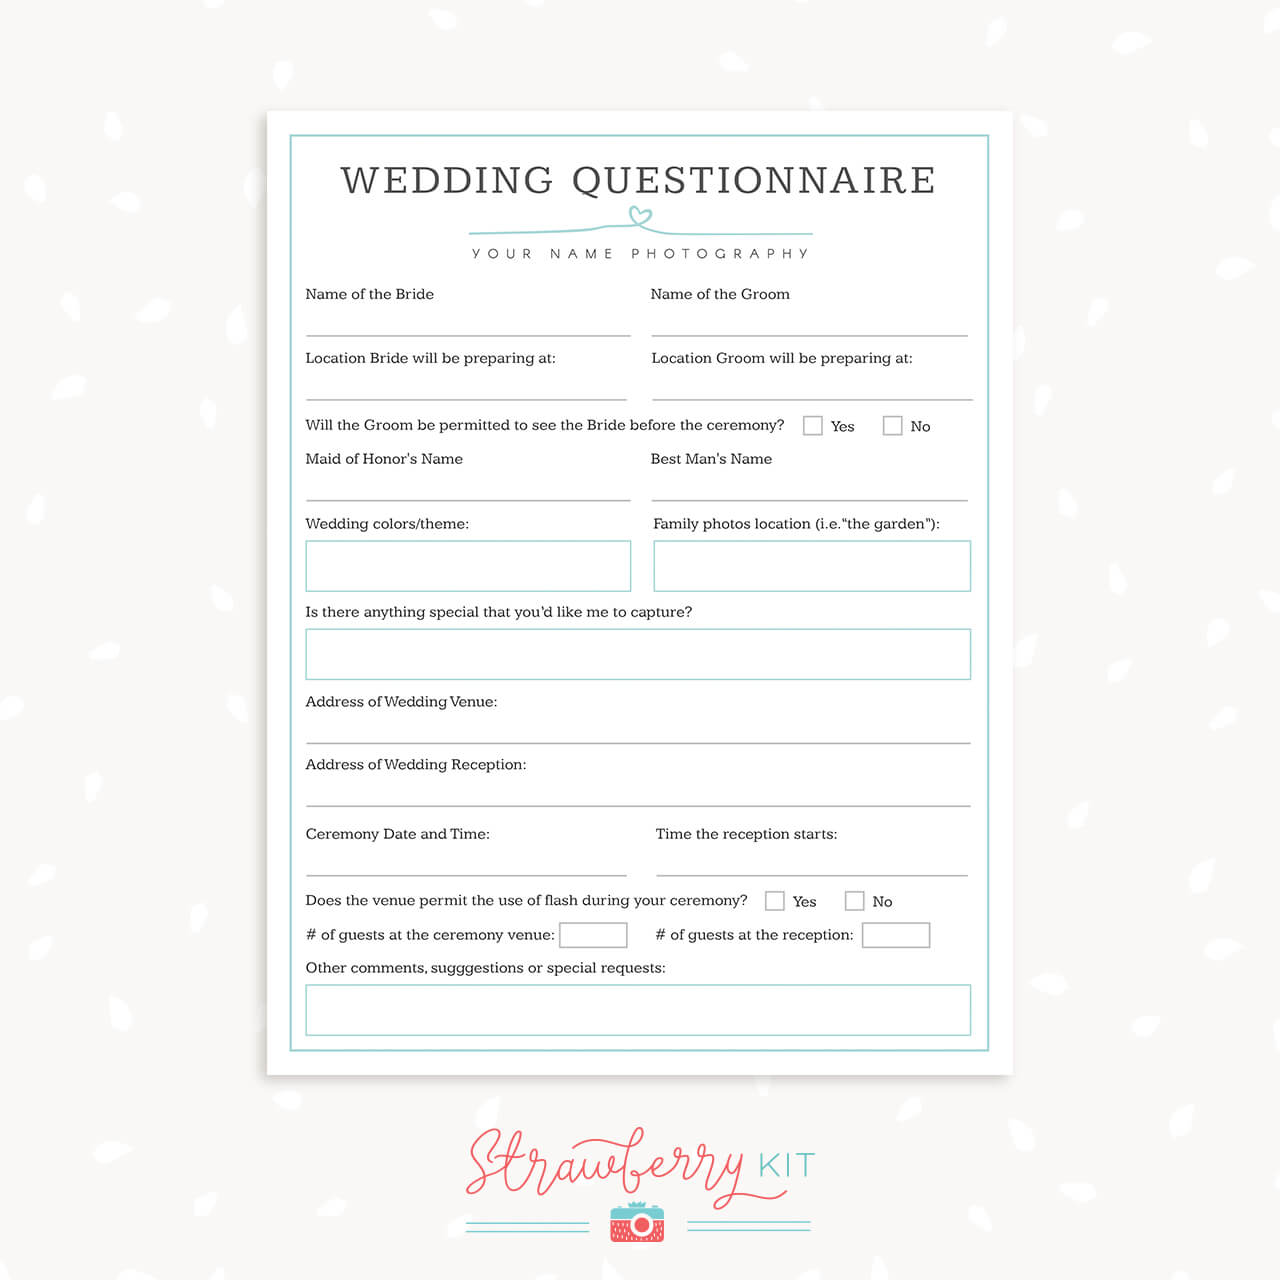 Wedding Photographer Questionnaire Template